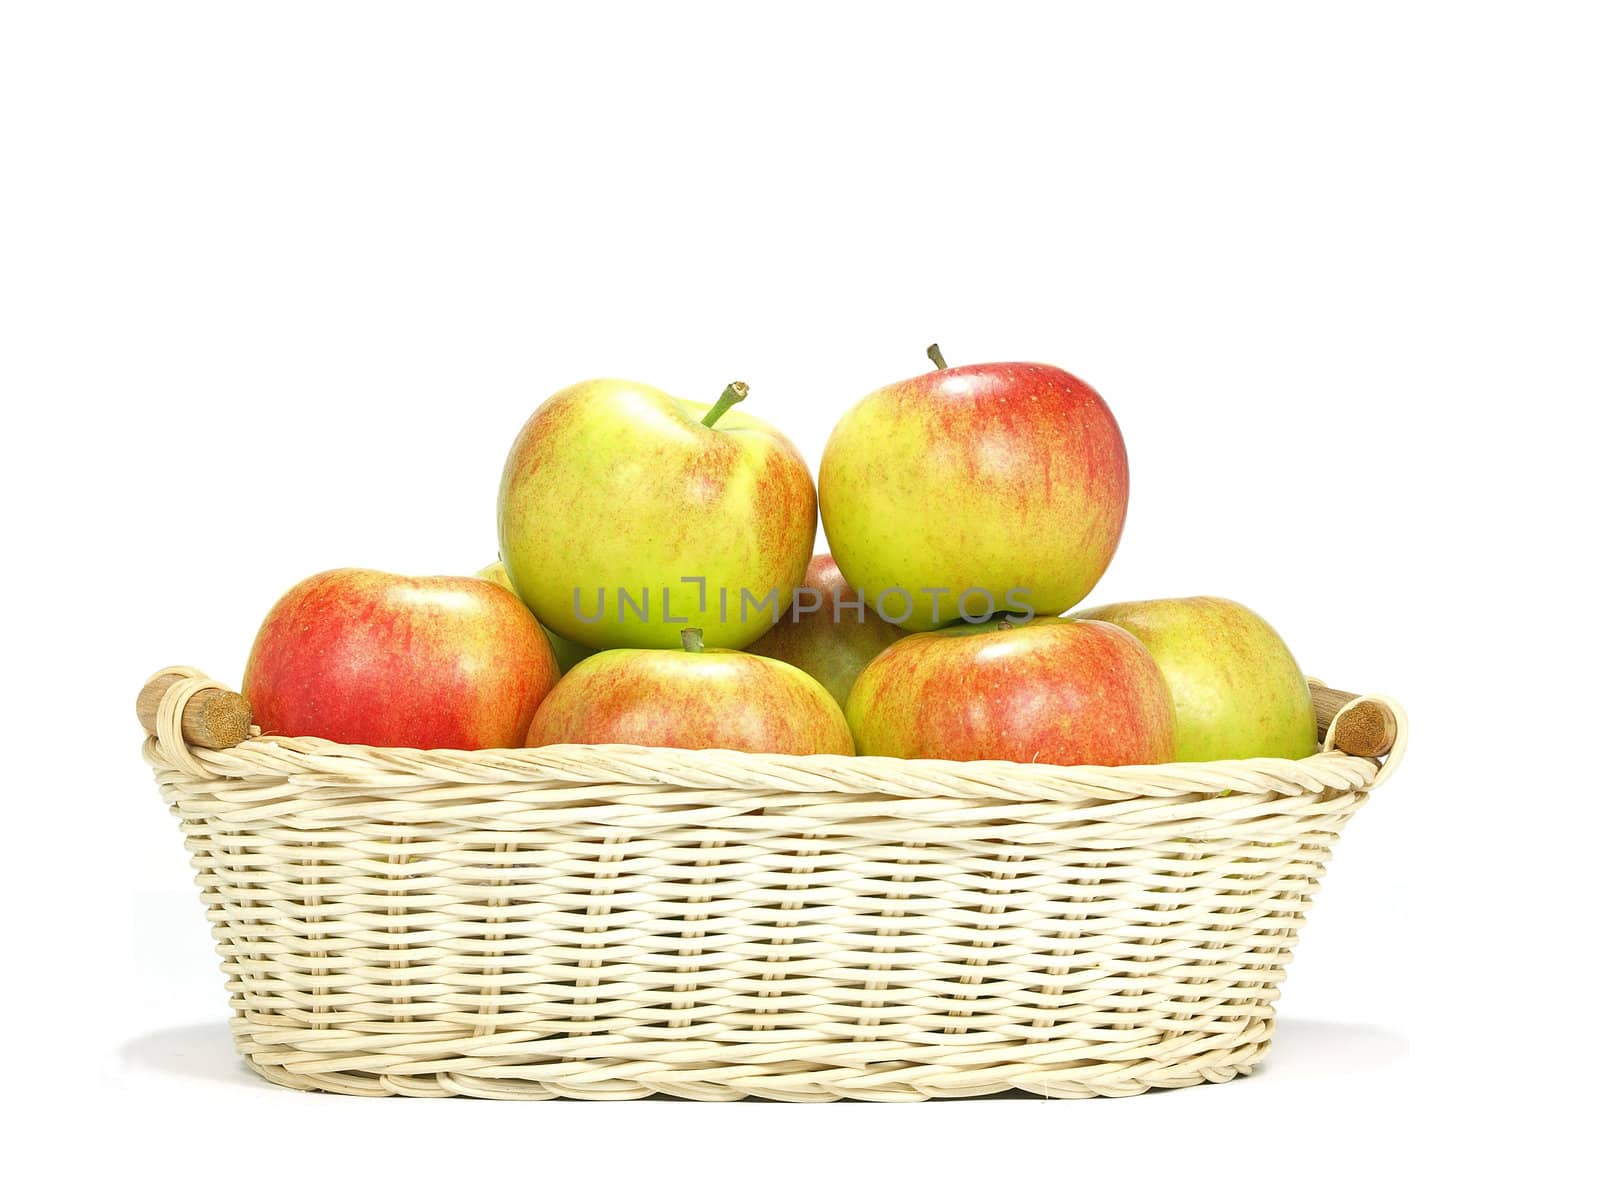 elstar variety apples by Ric510